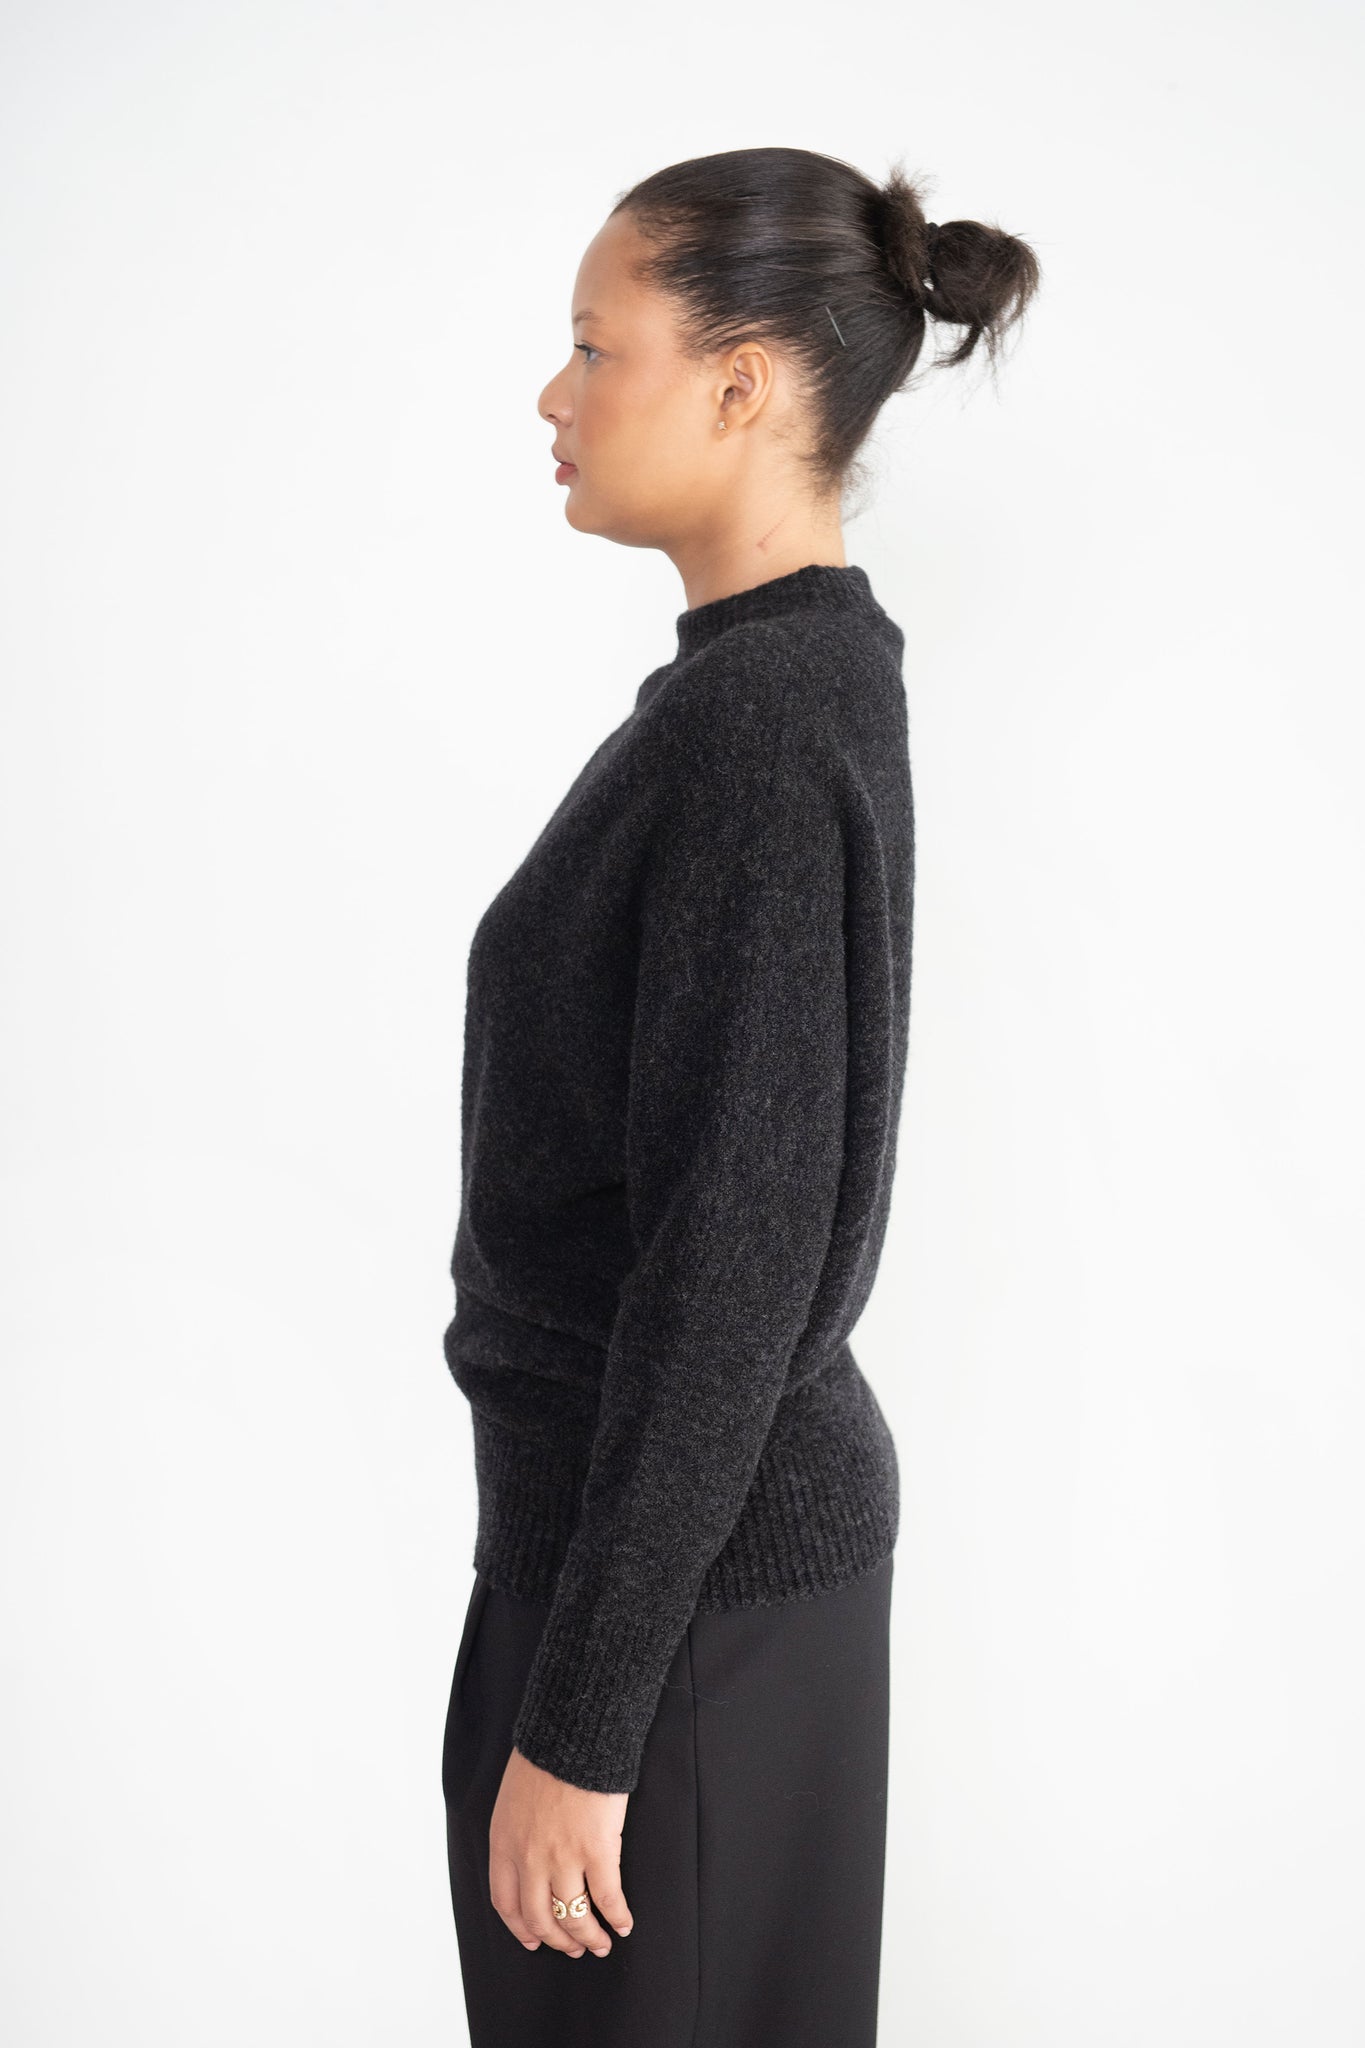 proenza schouler - Viscose Wool Sweater, Charcoal